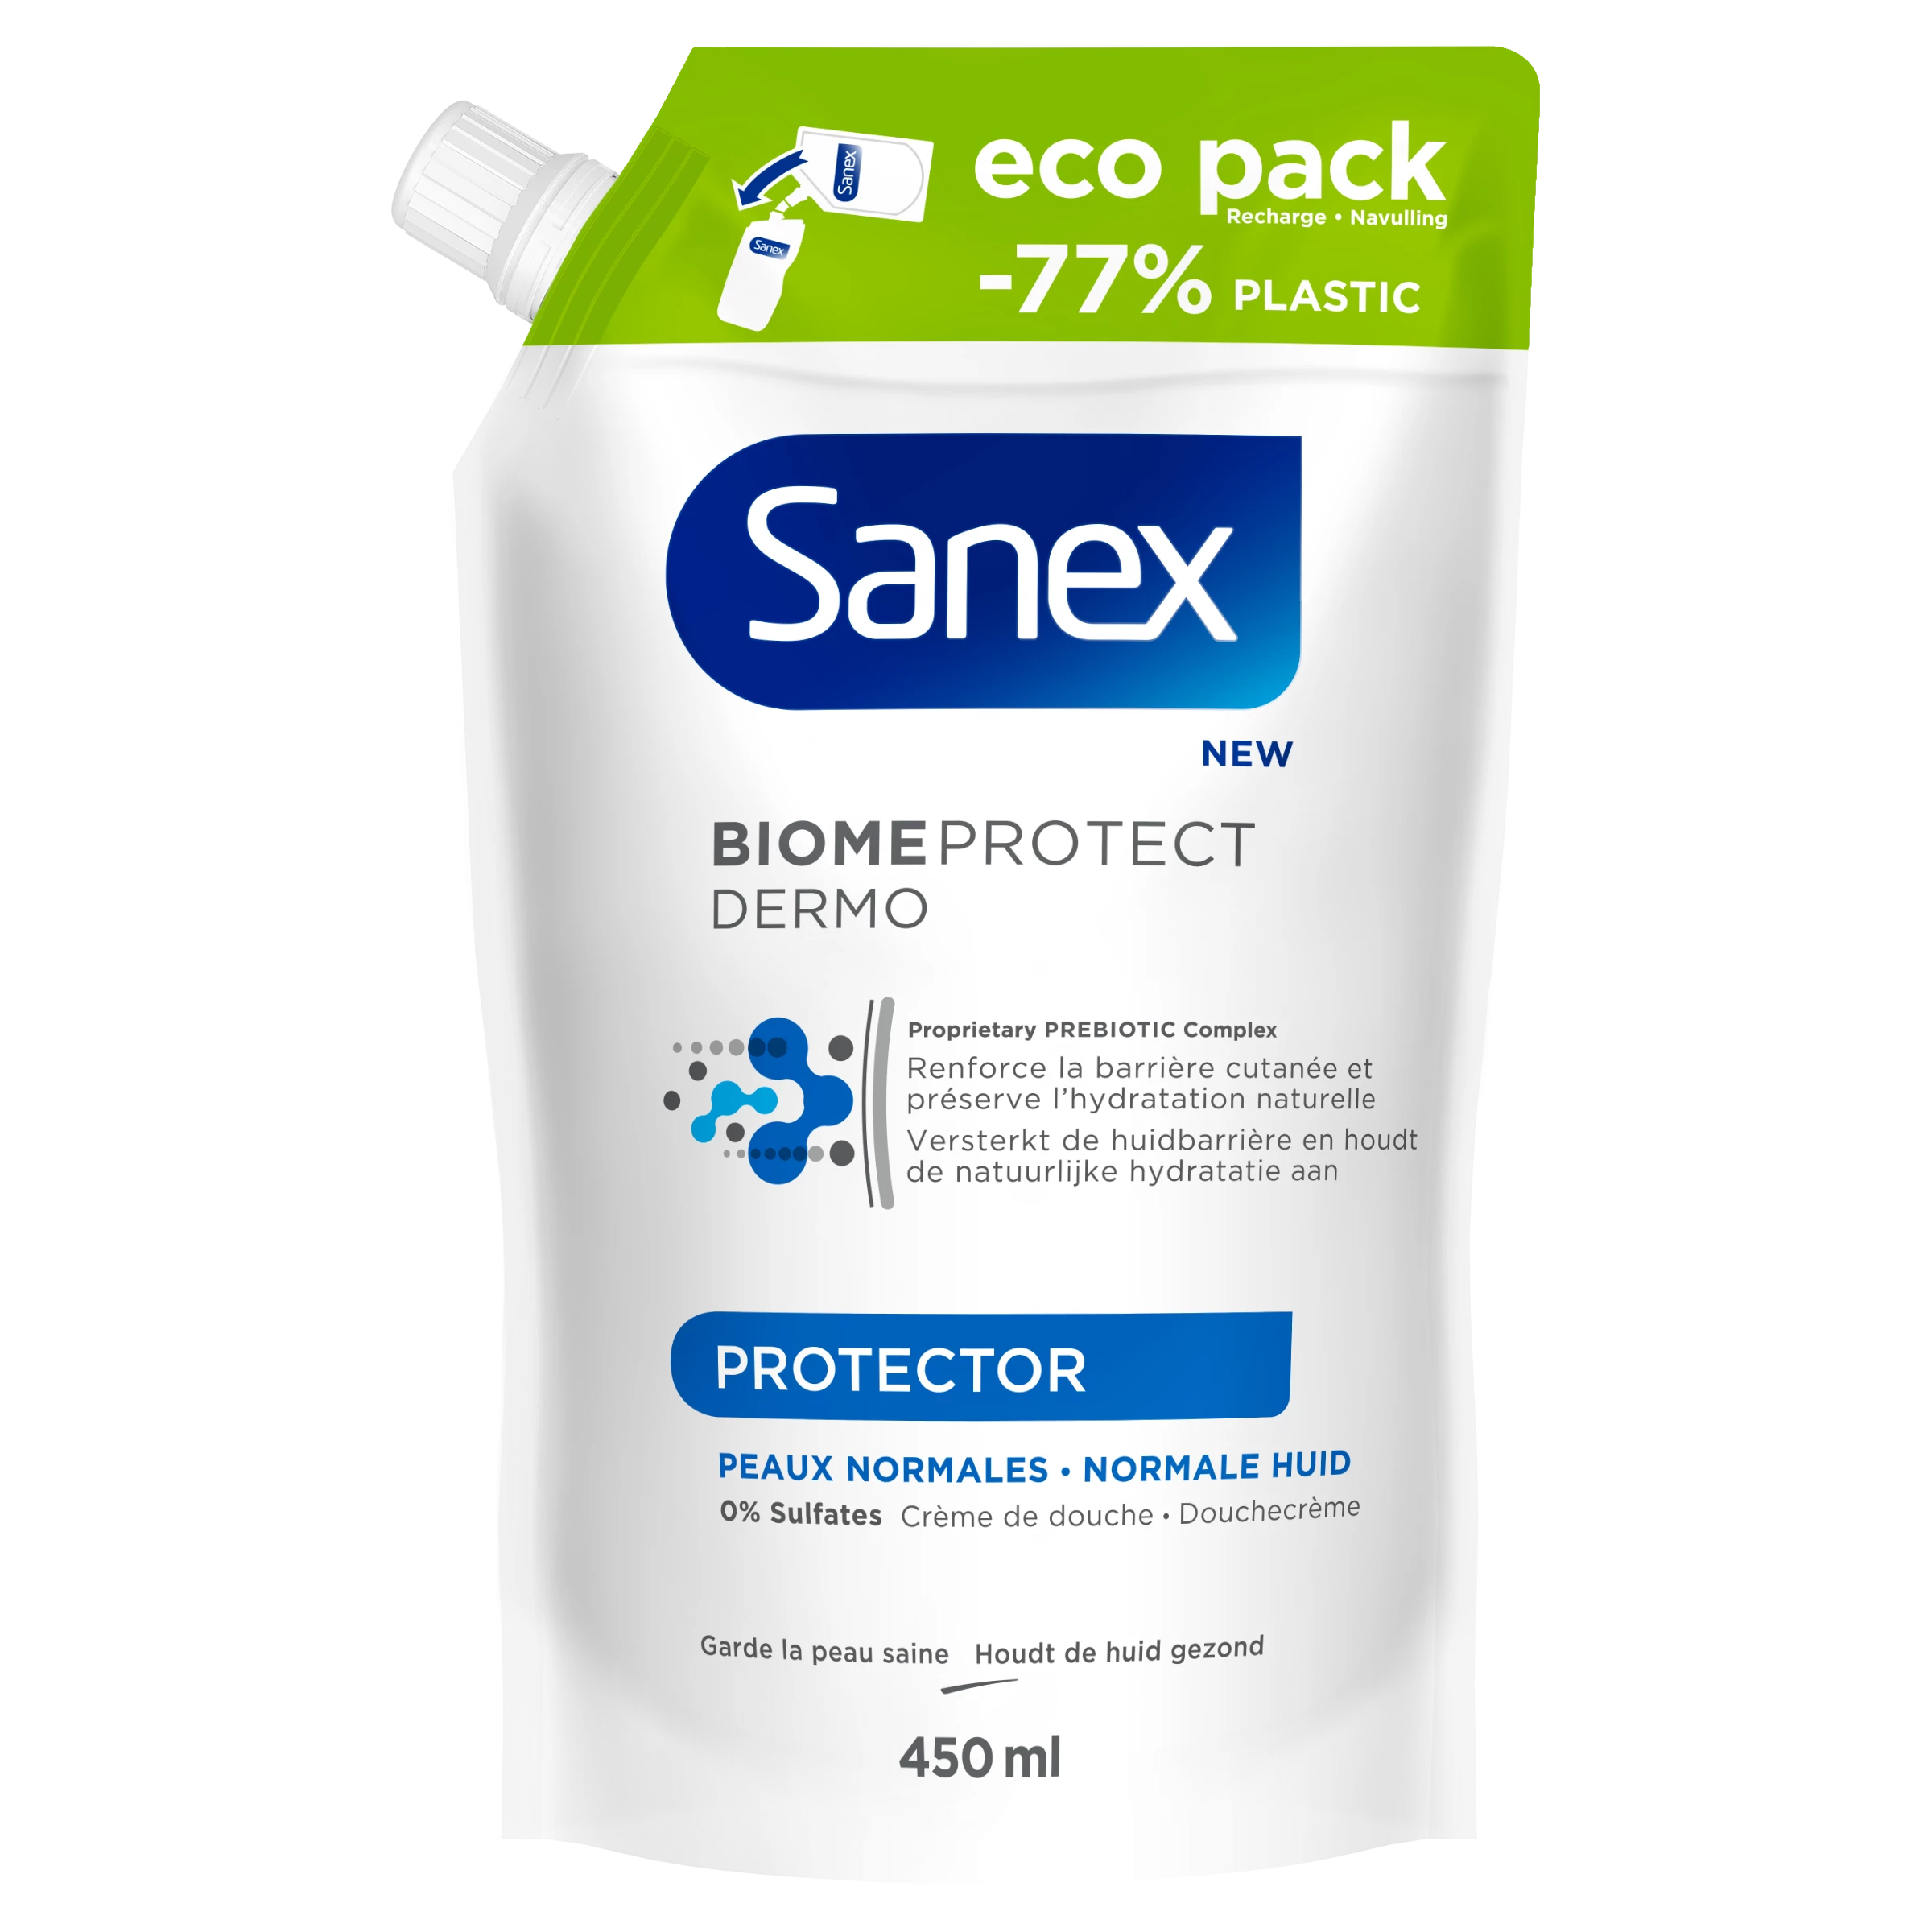 Sanex Biome Protect Rech 450ml